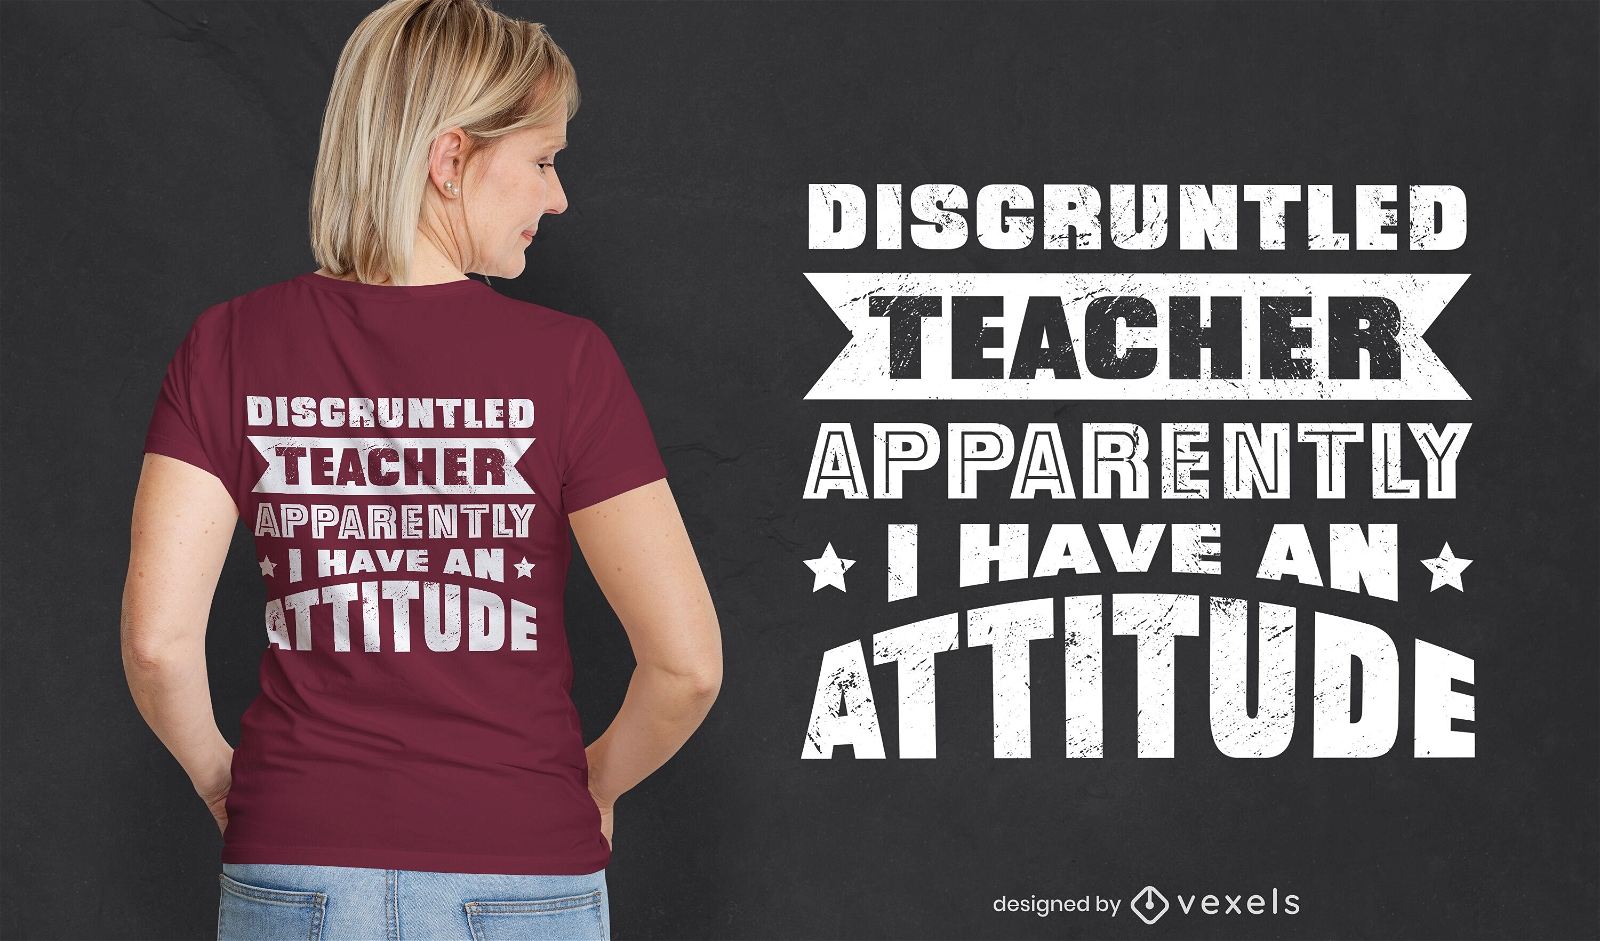 Attitude teacher funny t-shirt design